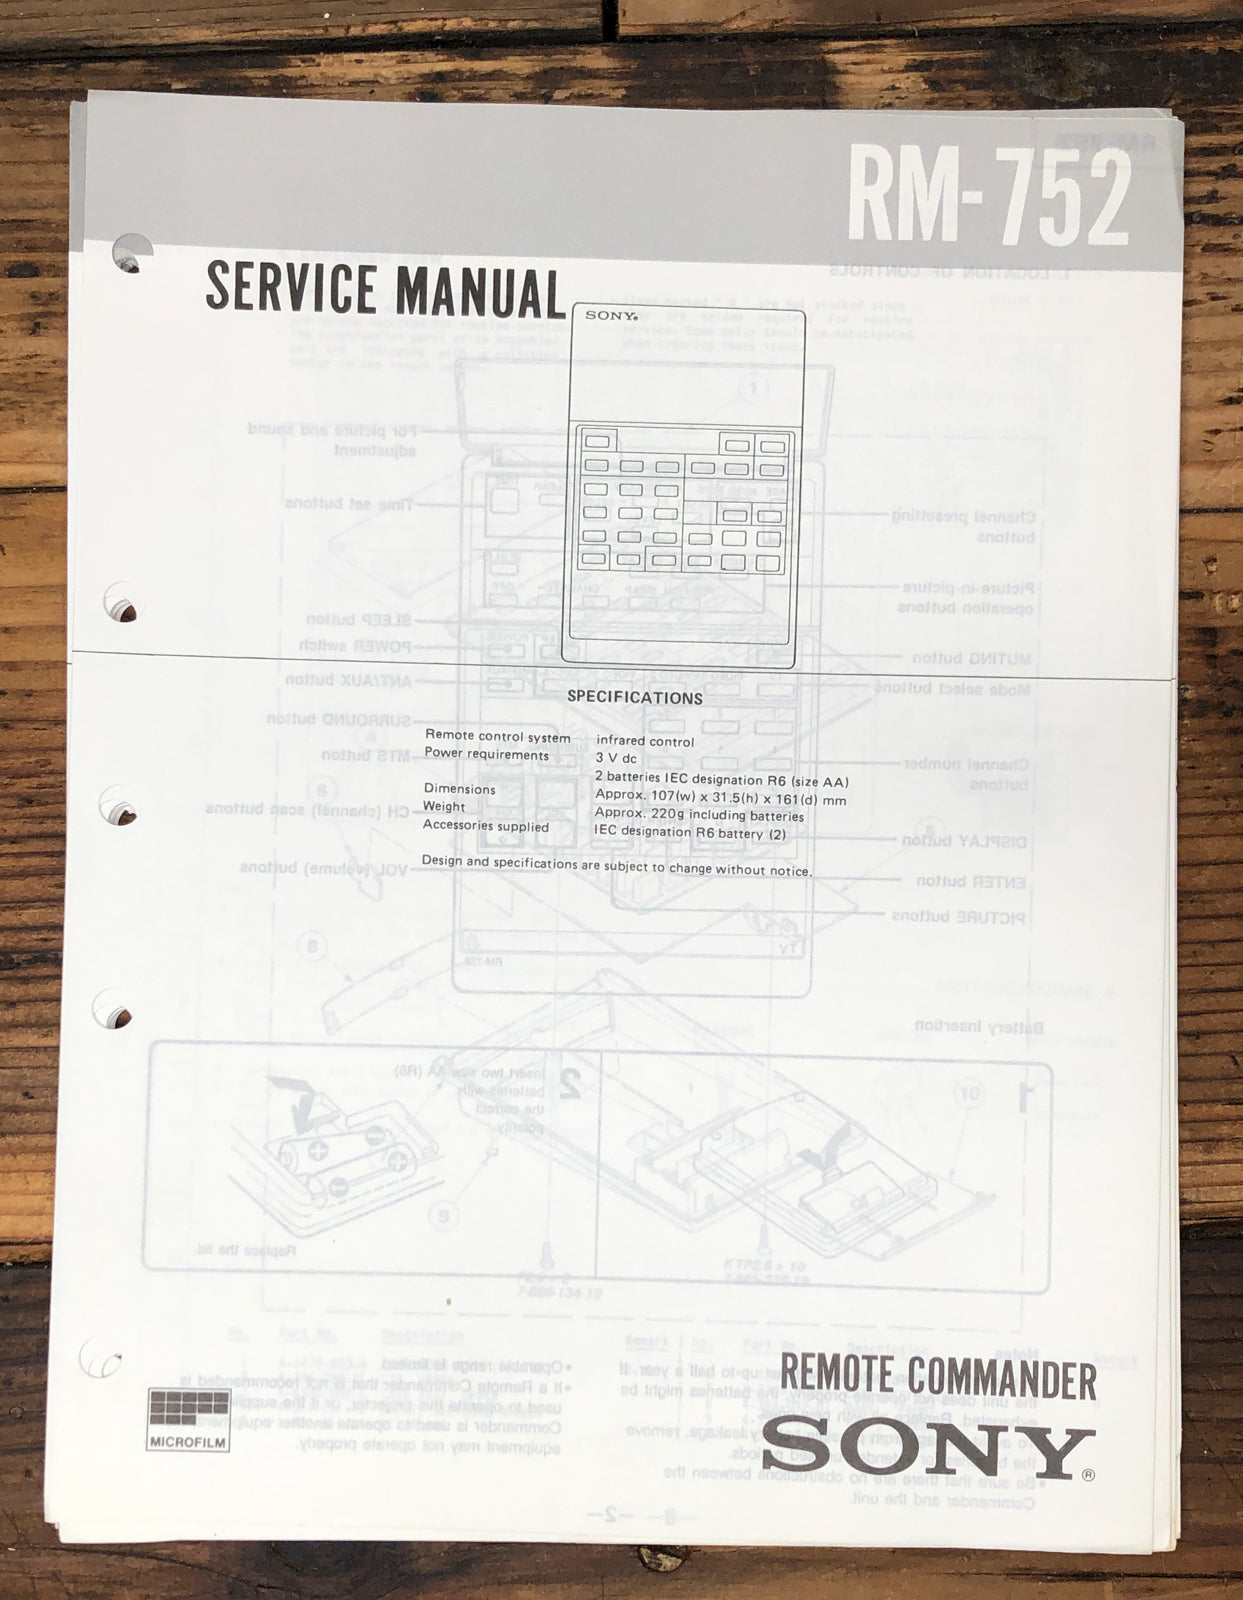 Sony RM-752 Remote Control  Service Manual *Original*